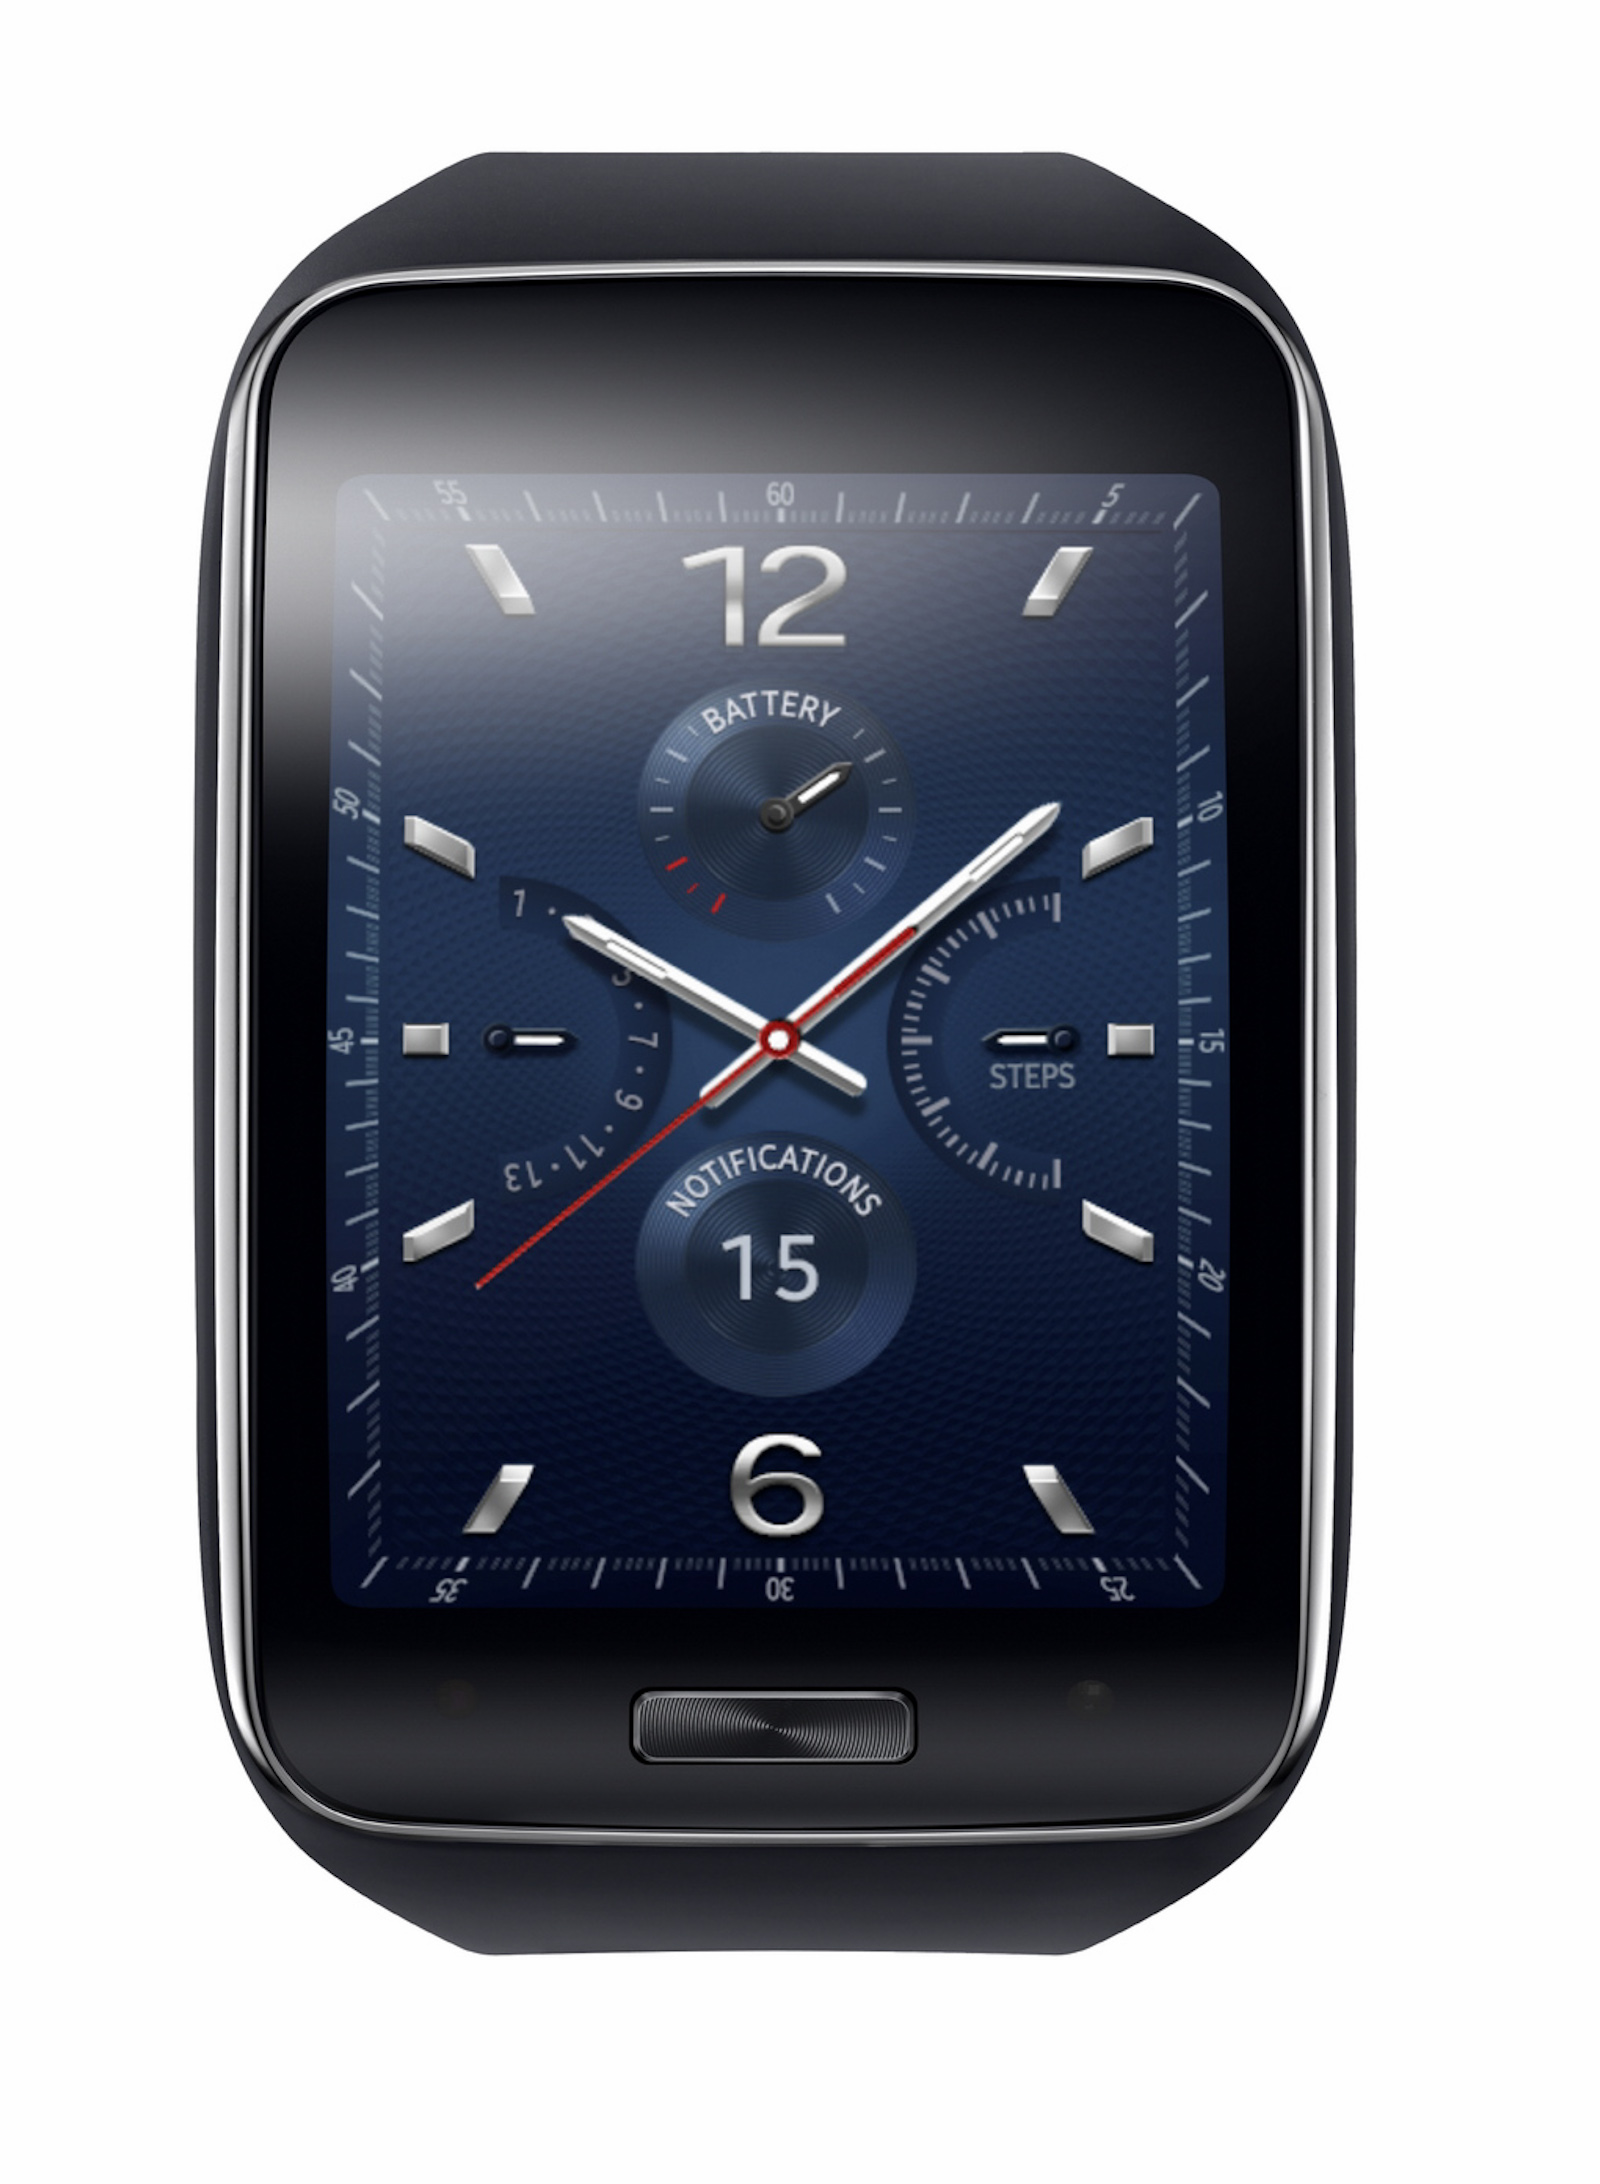 Samsung-Gear-S-Curved-Display-Smartwatch-3.jpg